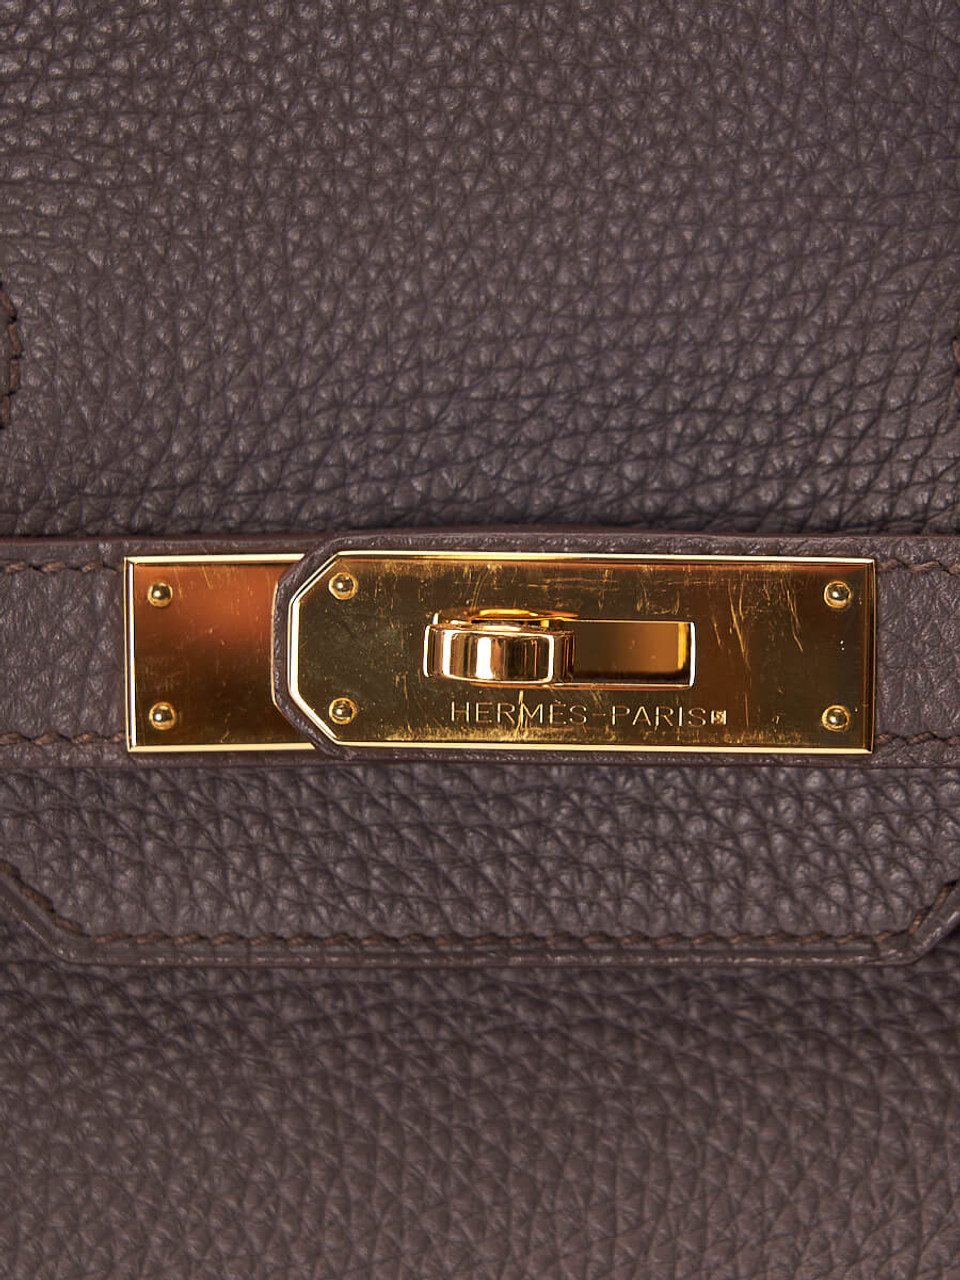 Hermès Etoupe Birkin 35cm of Togo Leather with Gold Hardware